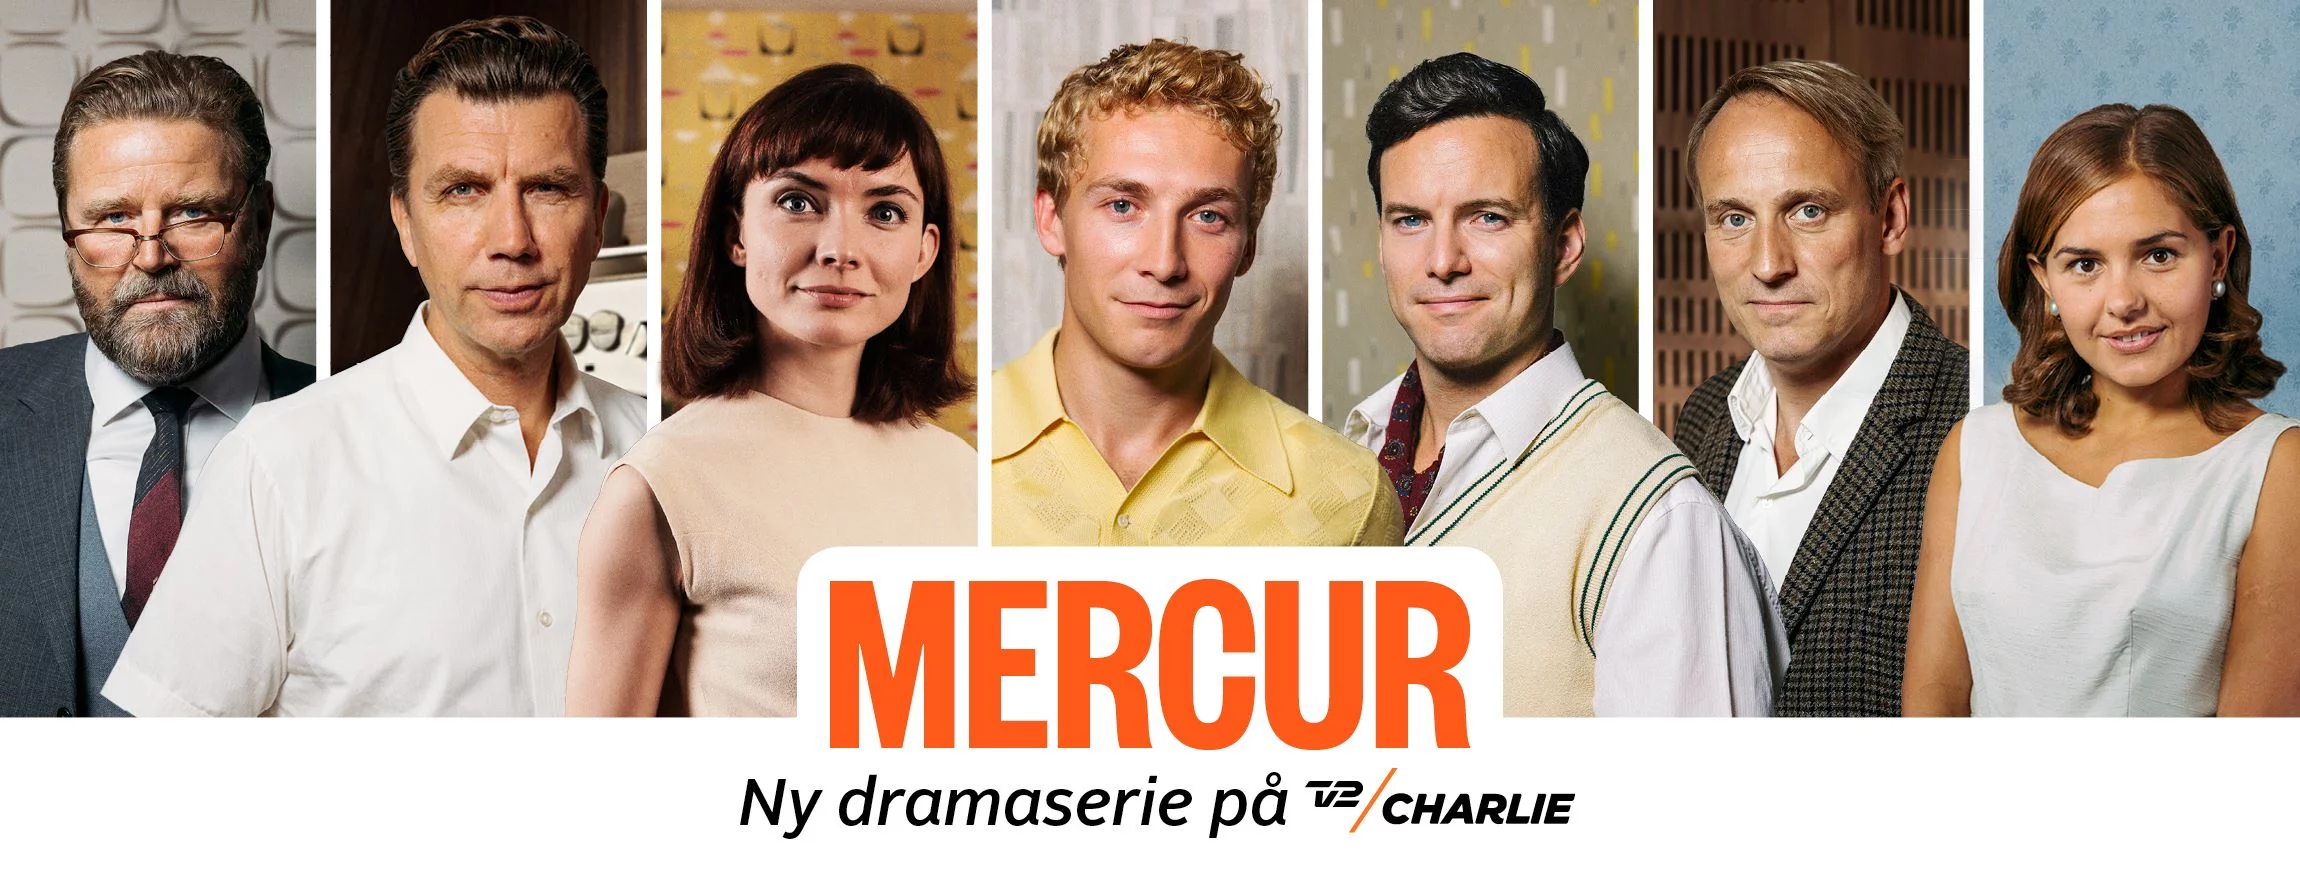 Mercur TV 2 Charlie TV 2 Play